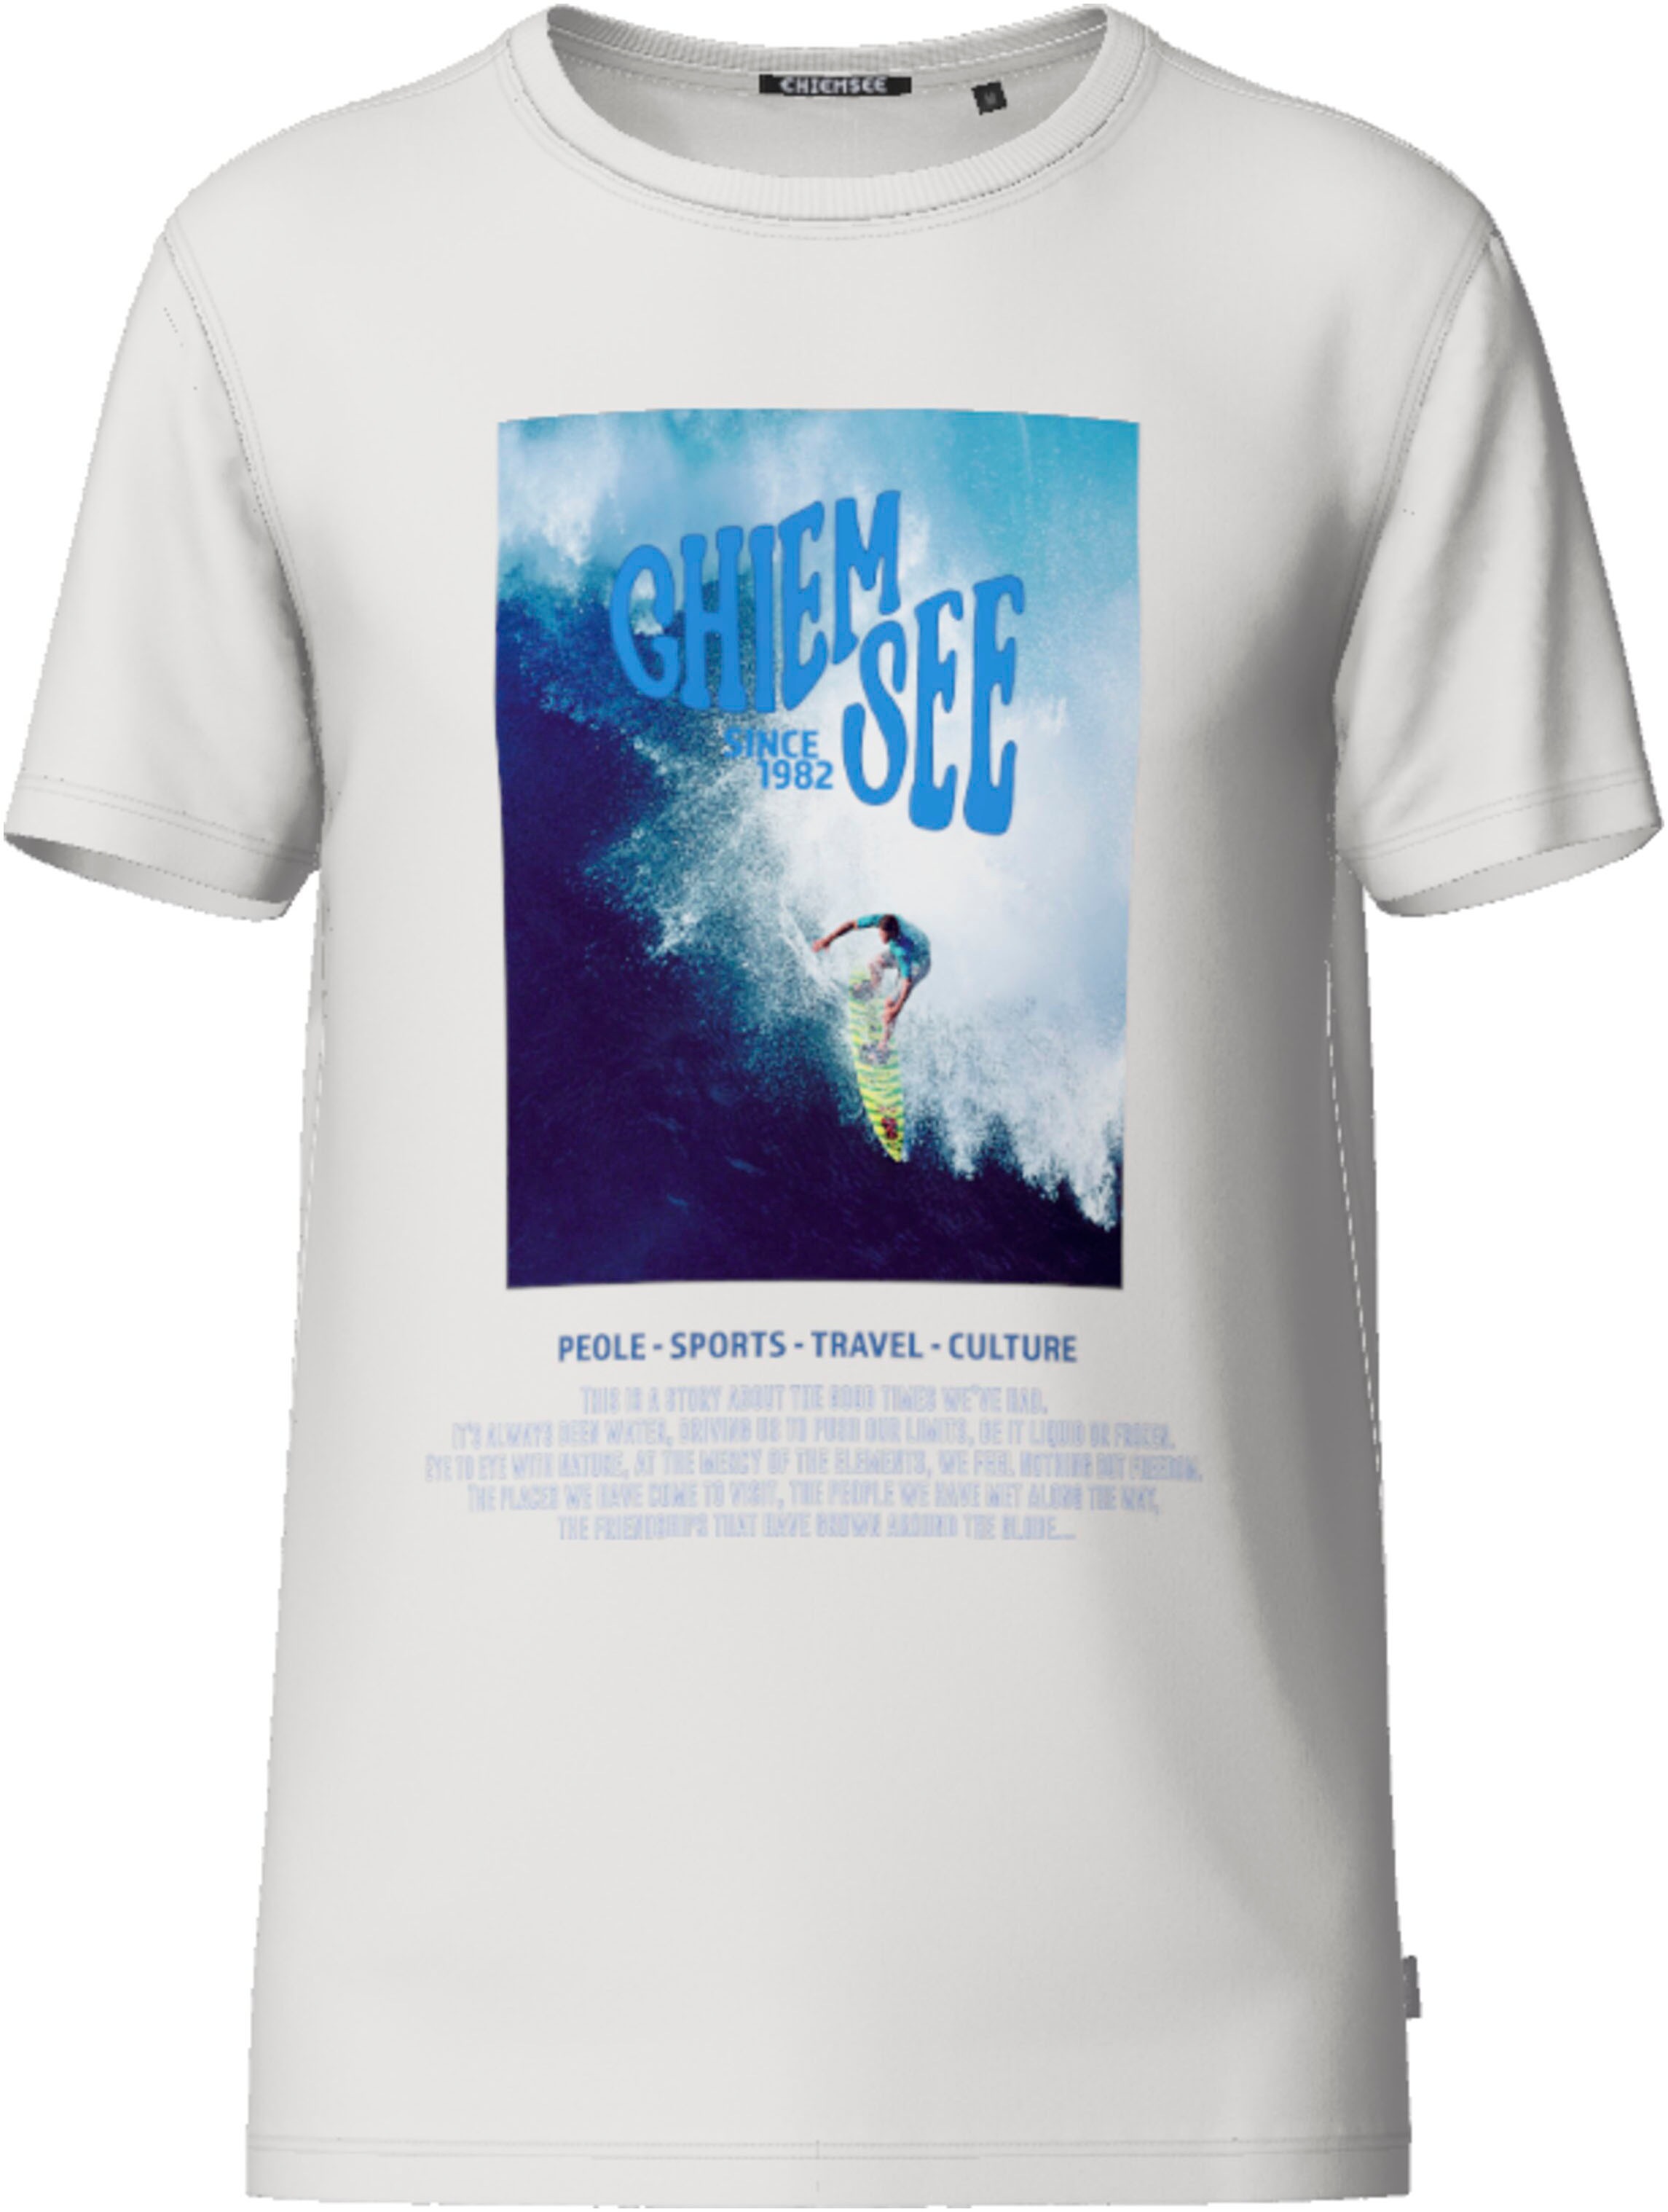 Chiemsee OTTO online T-Shirt bei shoppen